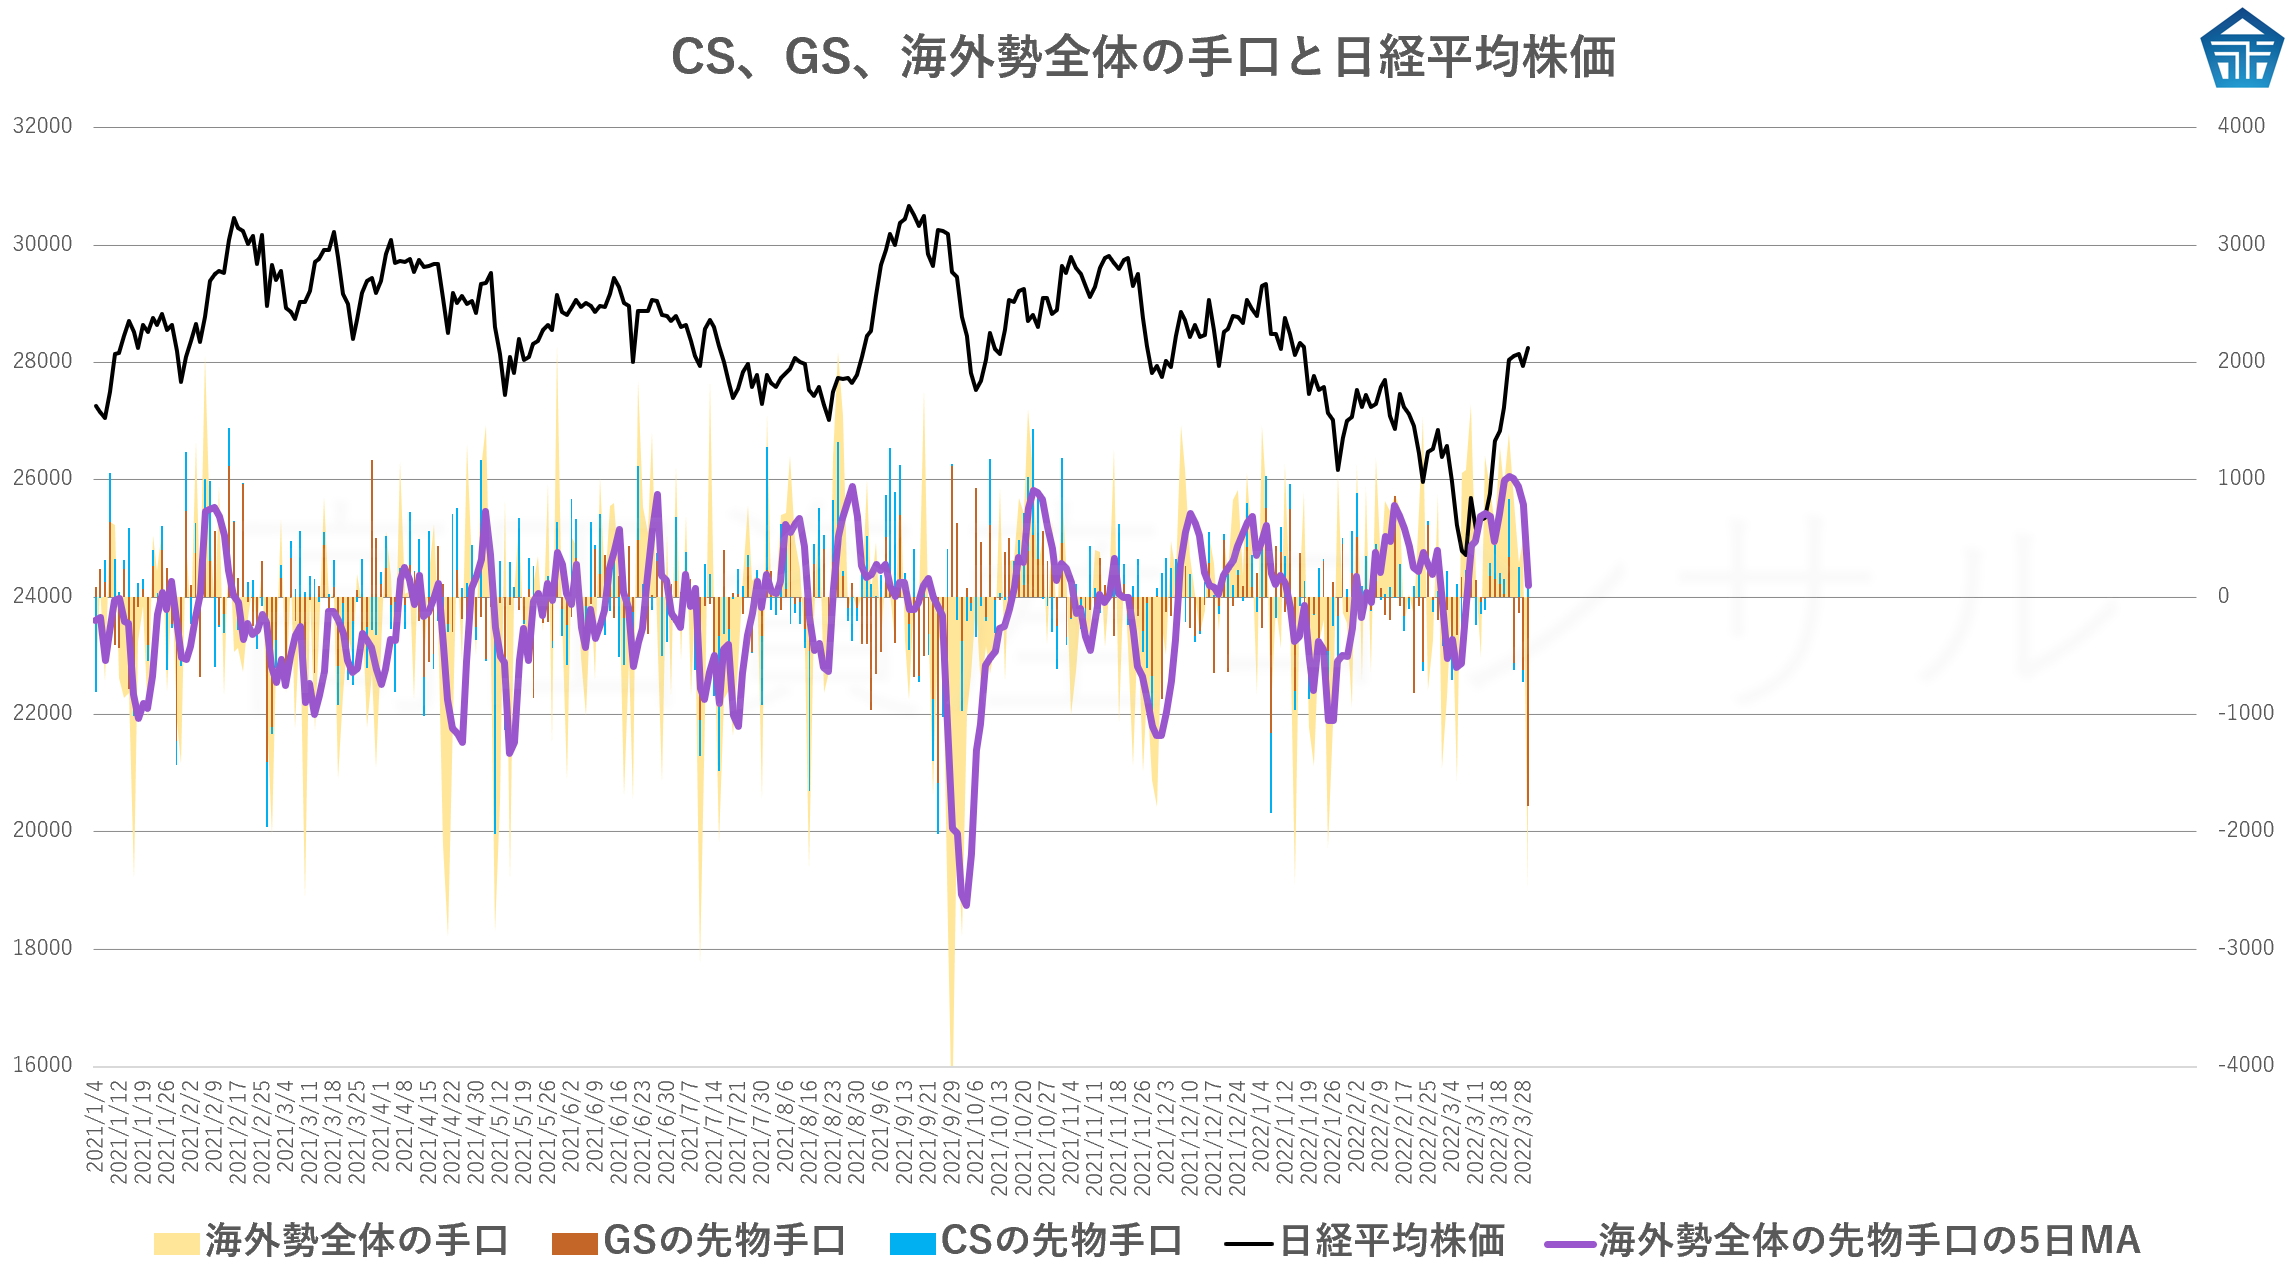 CS、GS、海外勢全体の手口と日経平均株価20220329